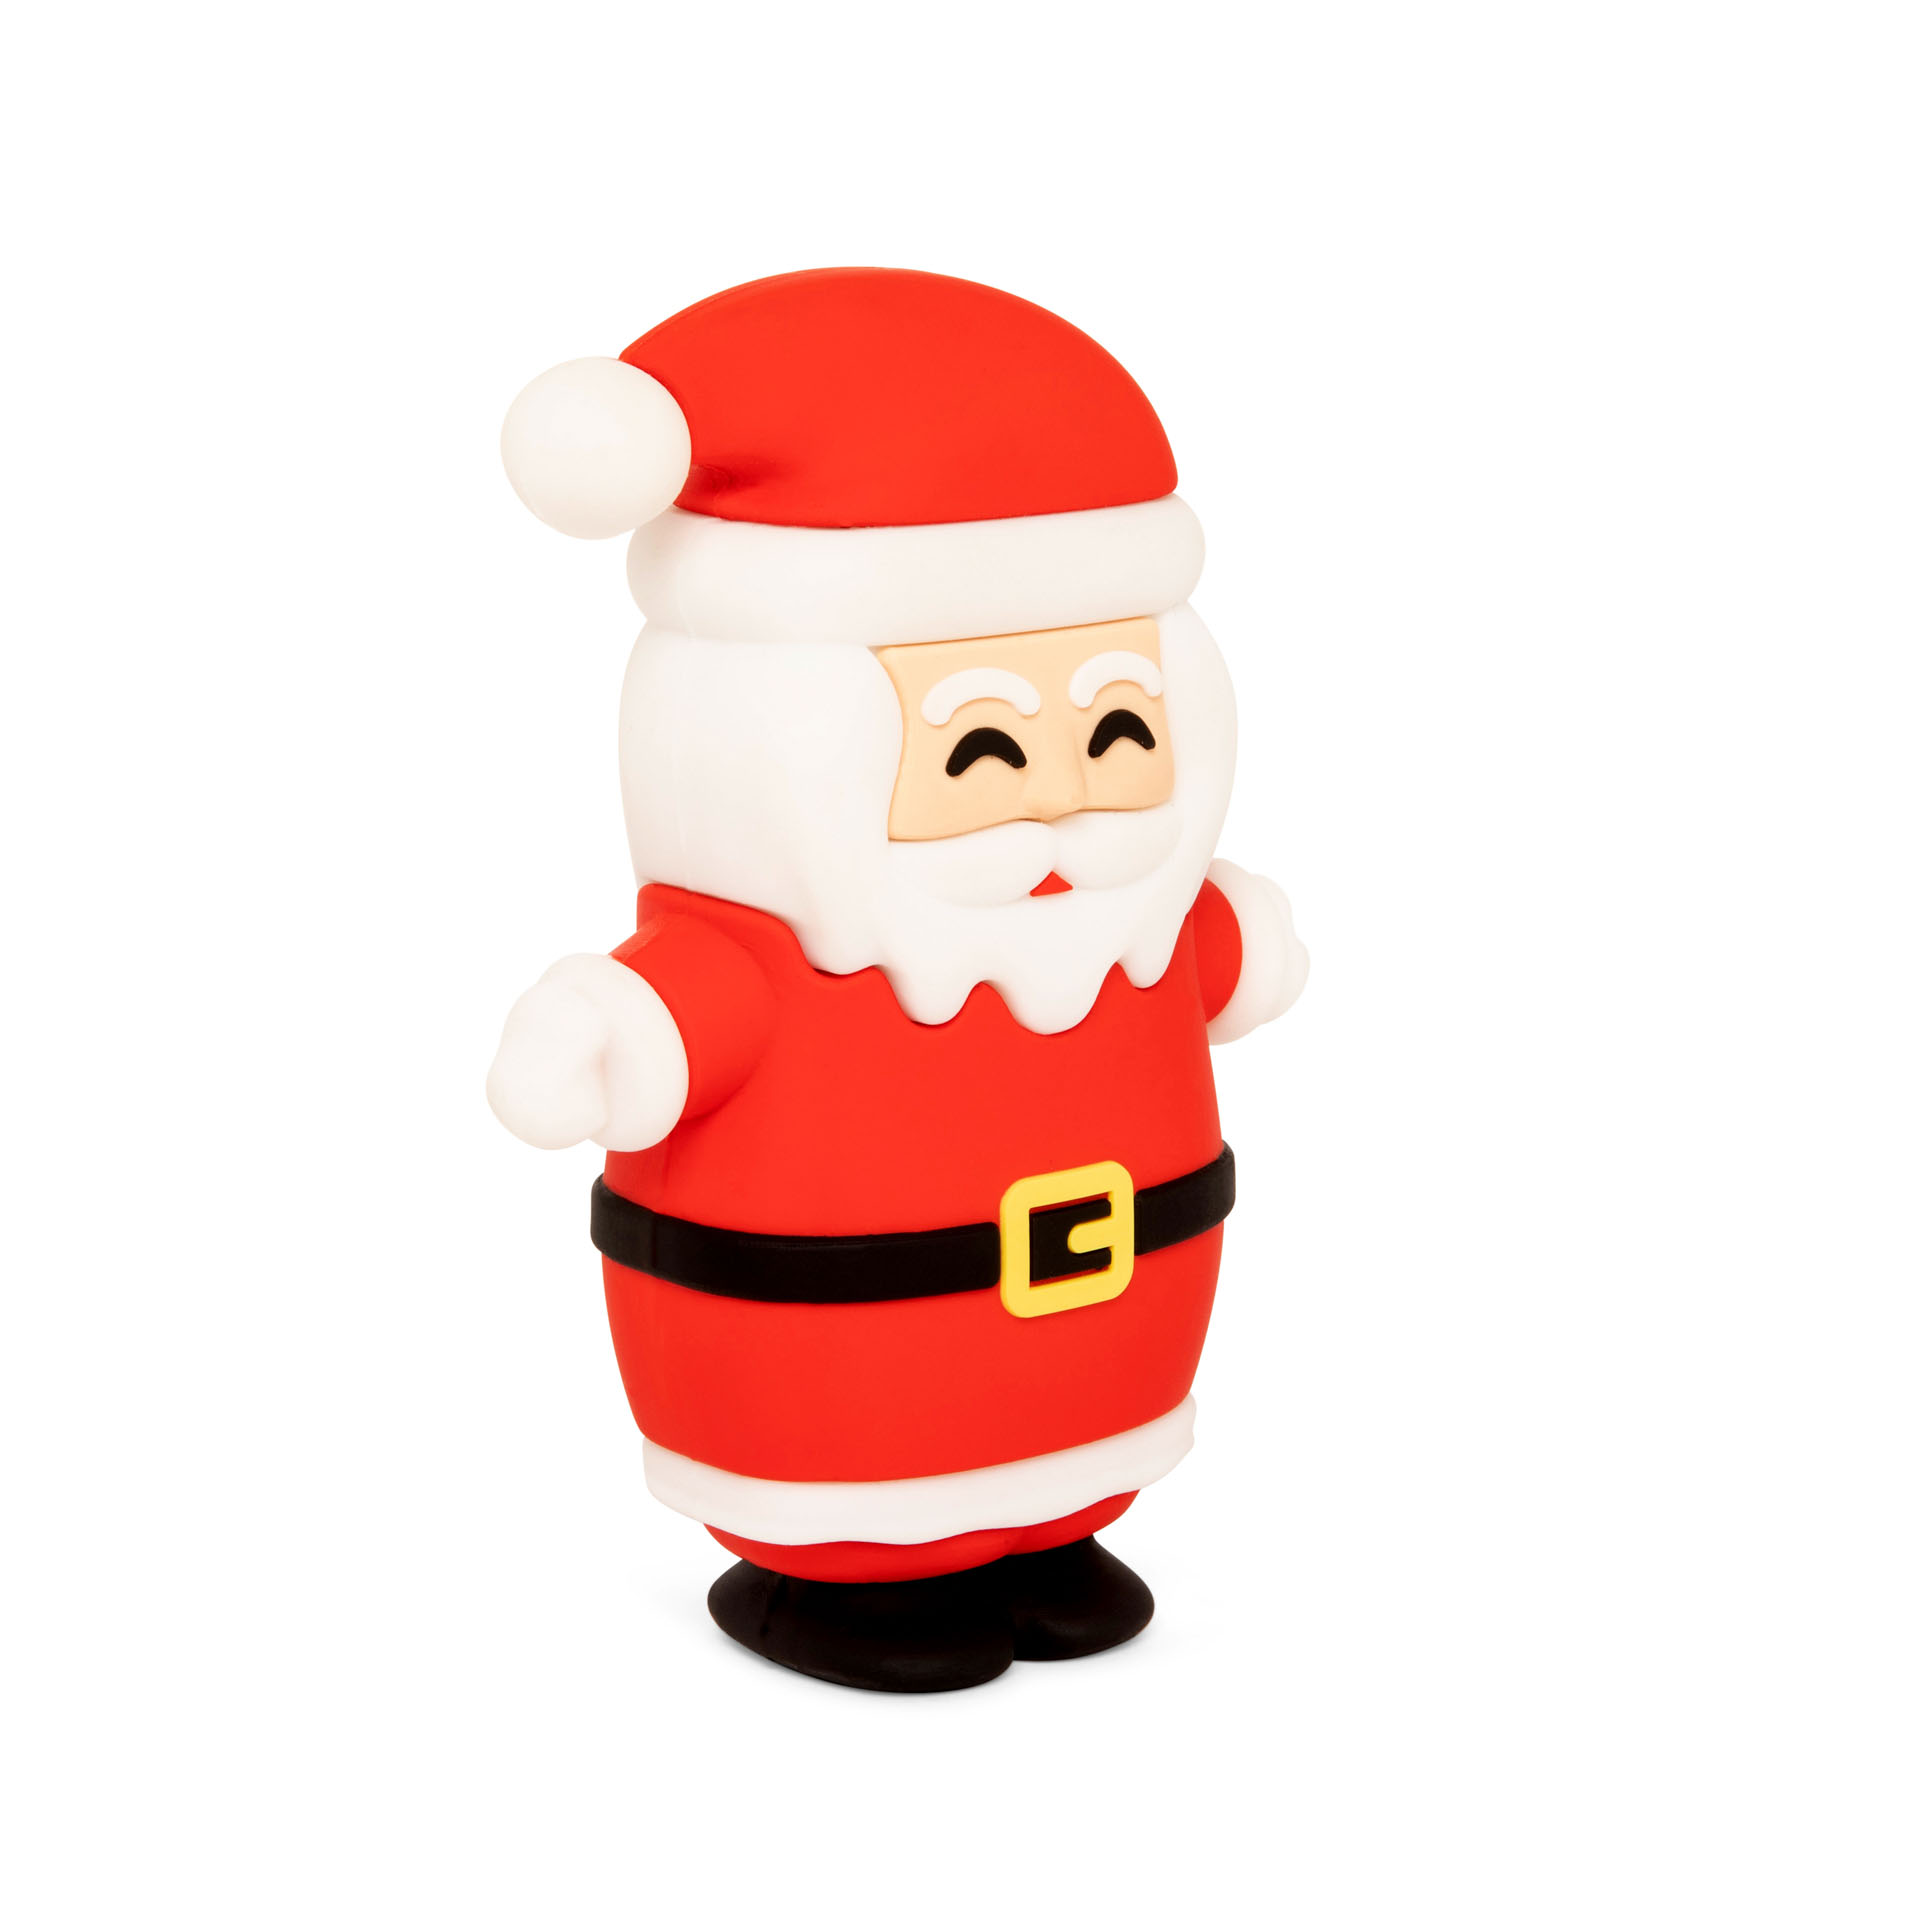 Speaker Bluetooth portatile natalizio  - Babbo Natale, , large